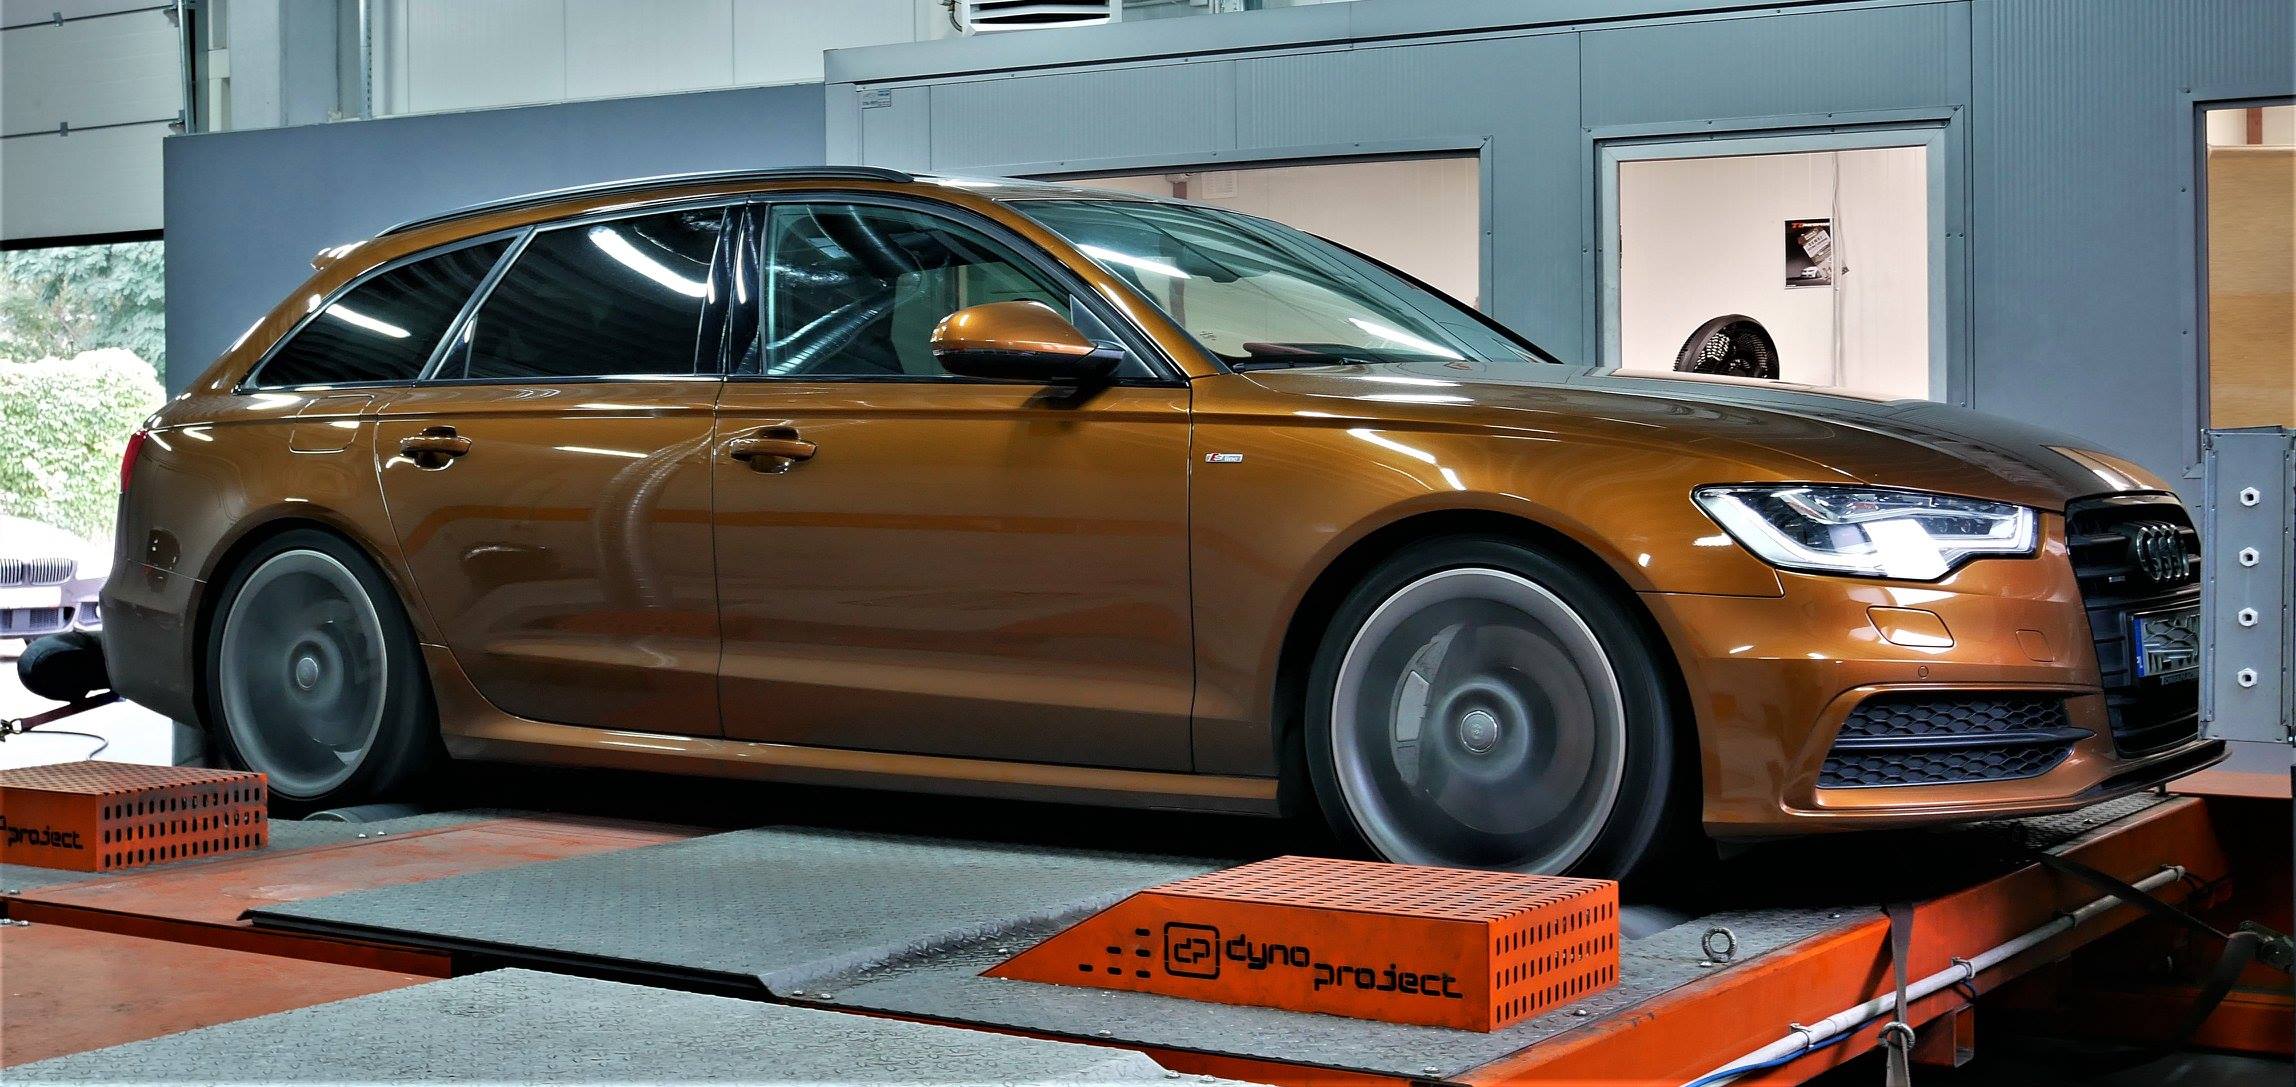 Audi A6 C7 3.0 V6 180 kW TDI Diesel ECU Remap +44bhp +75Nm Chip Tuning -  Euro Car Electronics store